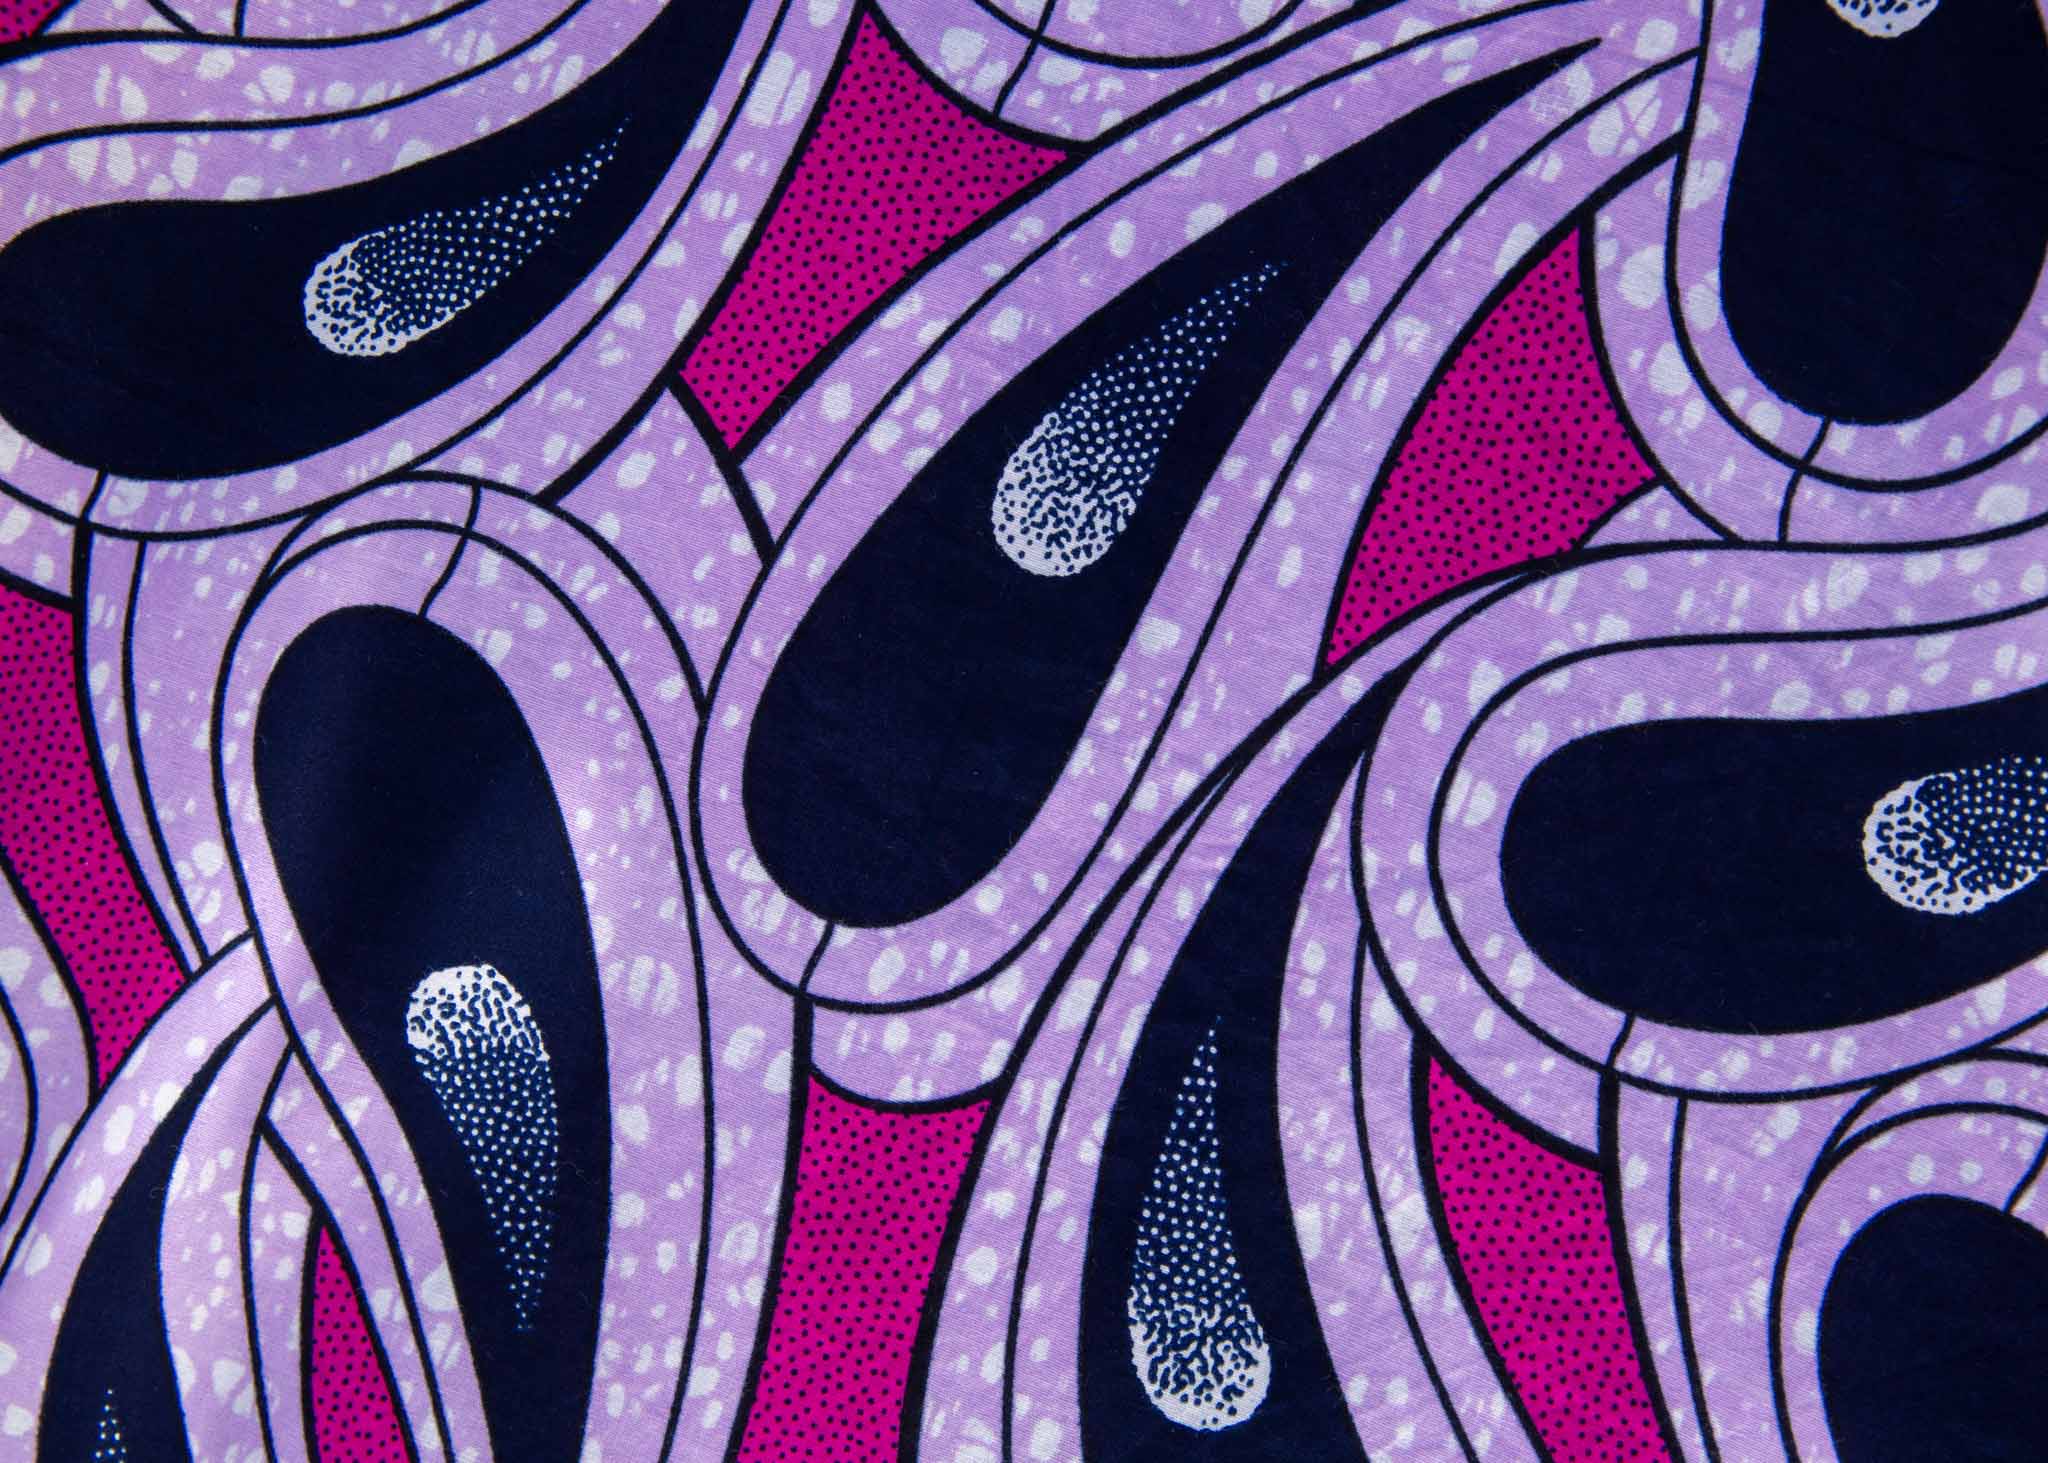 Close up display of purple and pink geometric print dress, fabric.